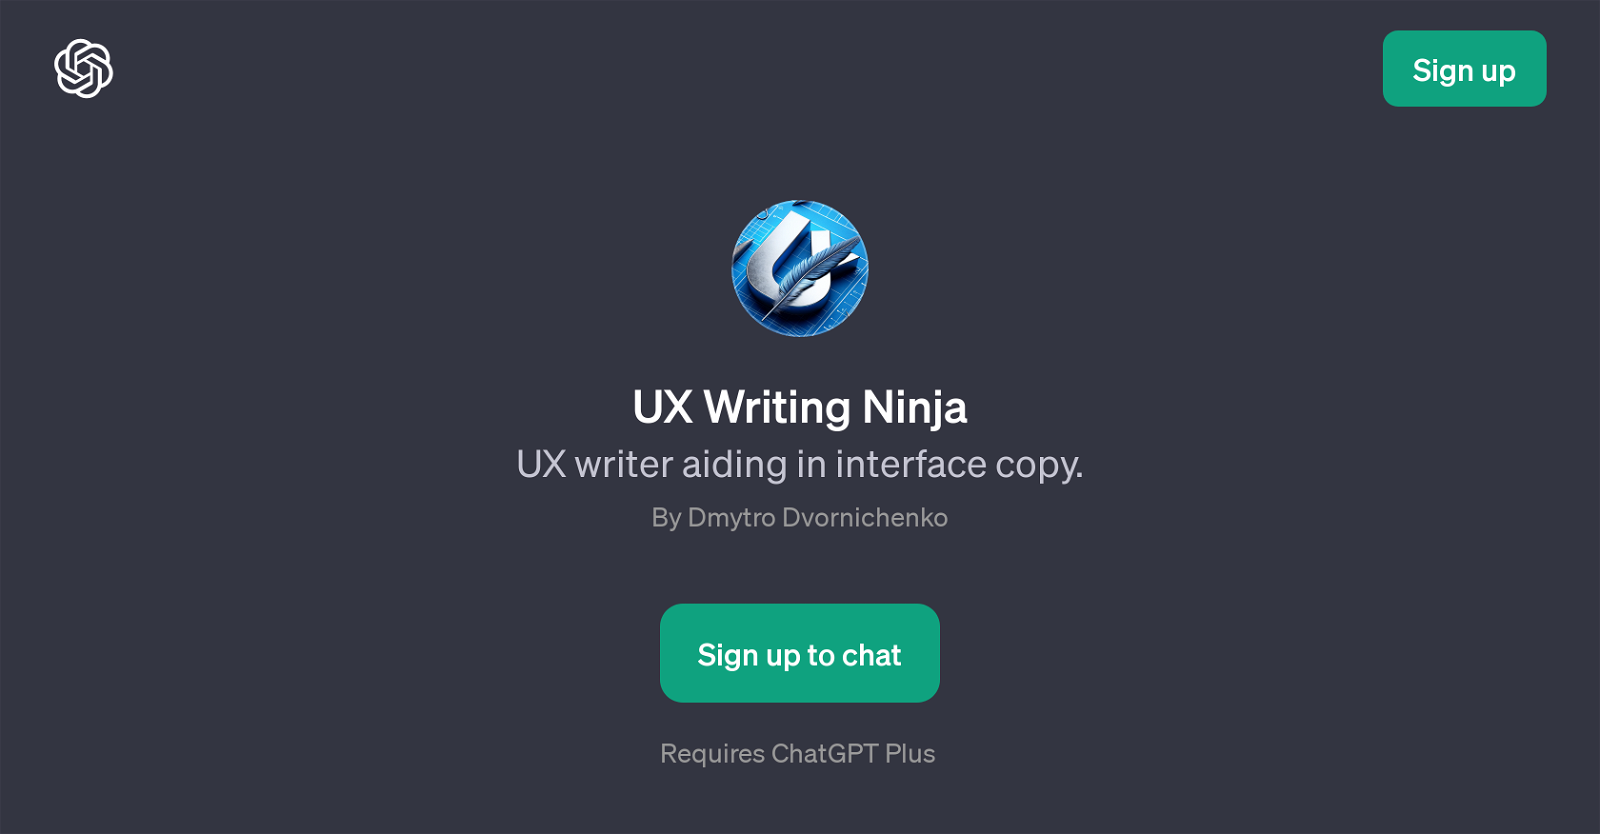 UX Writing Ninja website